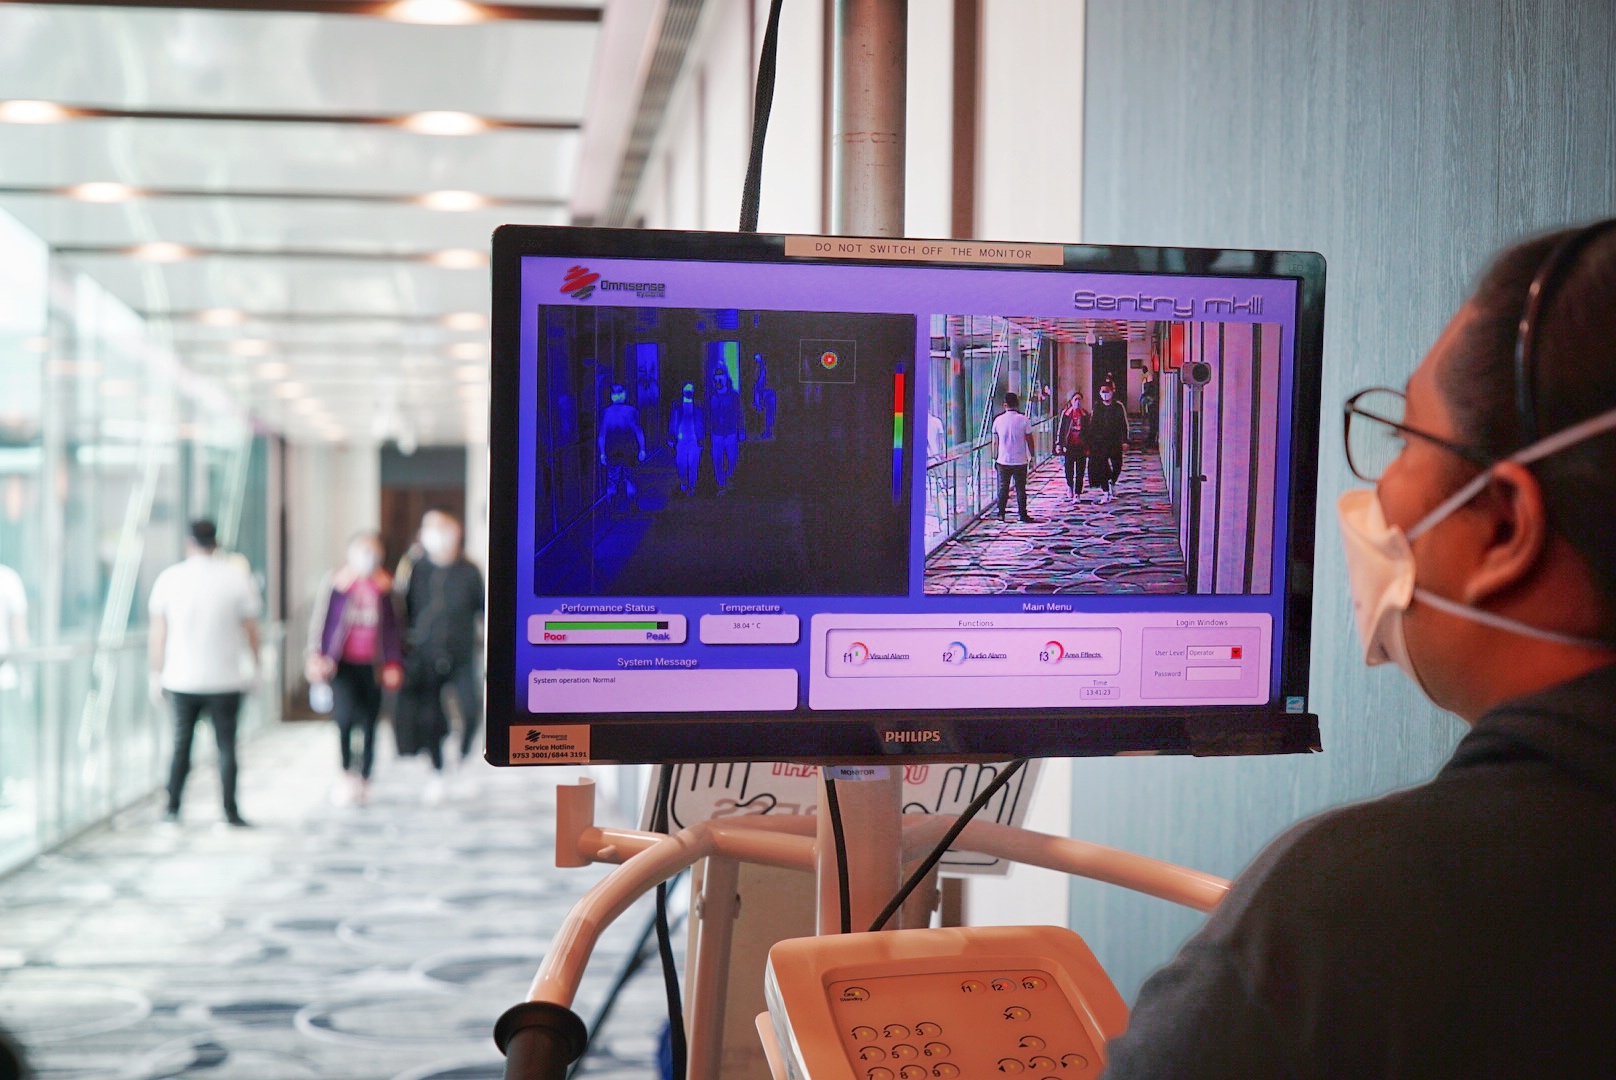 Thermal scanning of passengers at Singapore’s Changi Airport. Photo: Changi Airport/Facebook